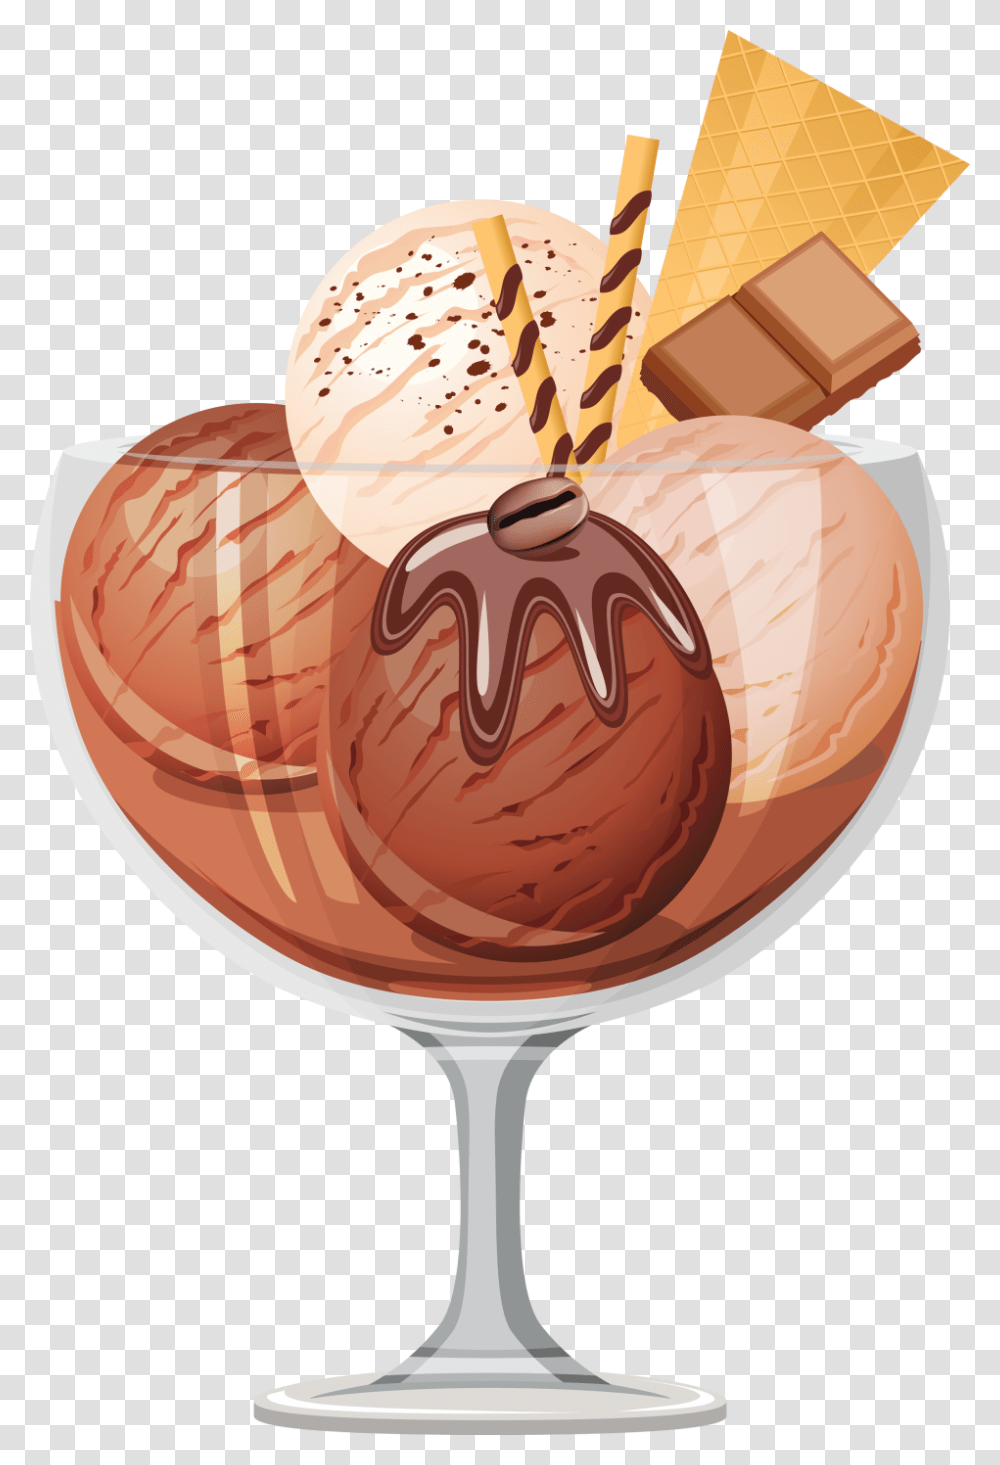 Ice Cream Image Chocolate Ice Cream Clipart, Dessert, Food, Creme, Glass Transparent Png